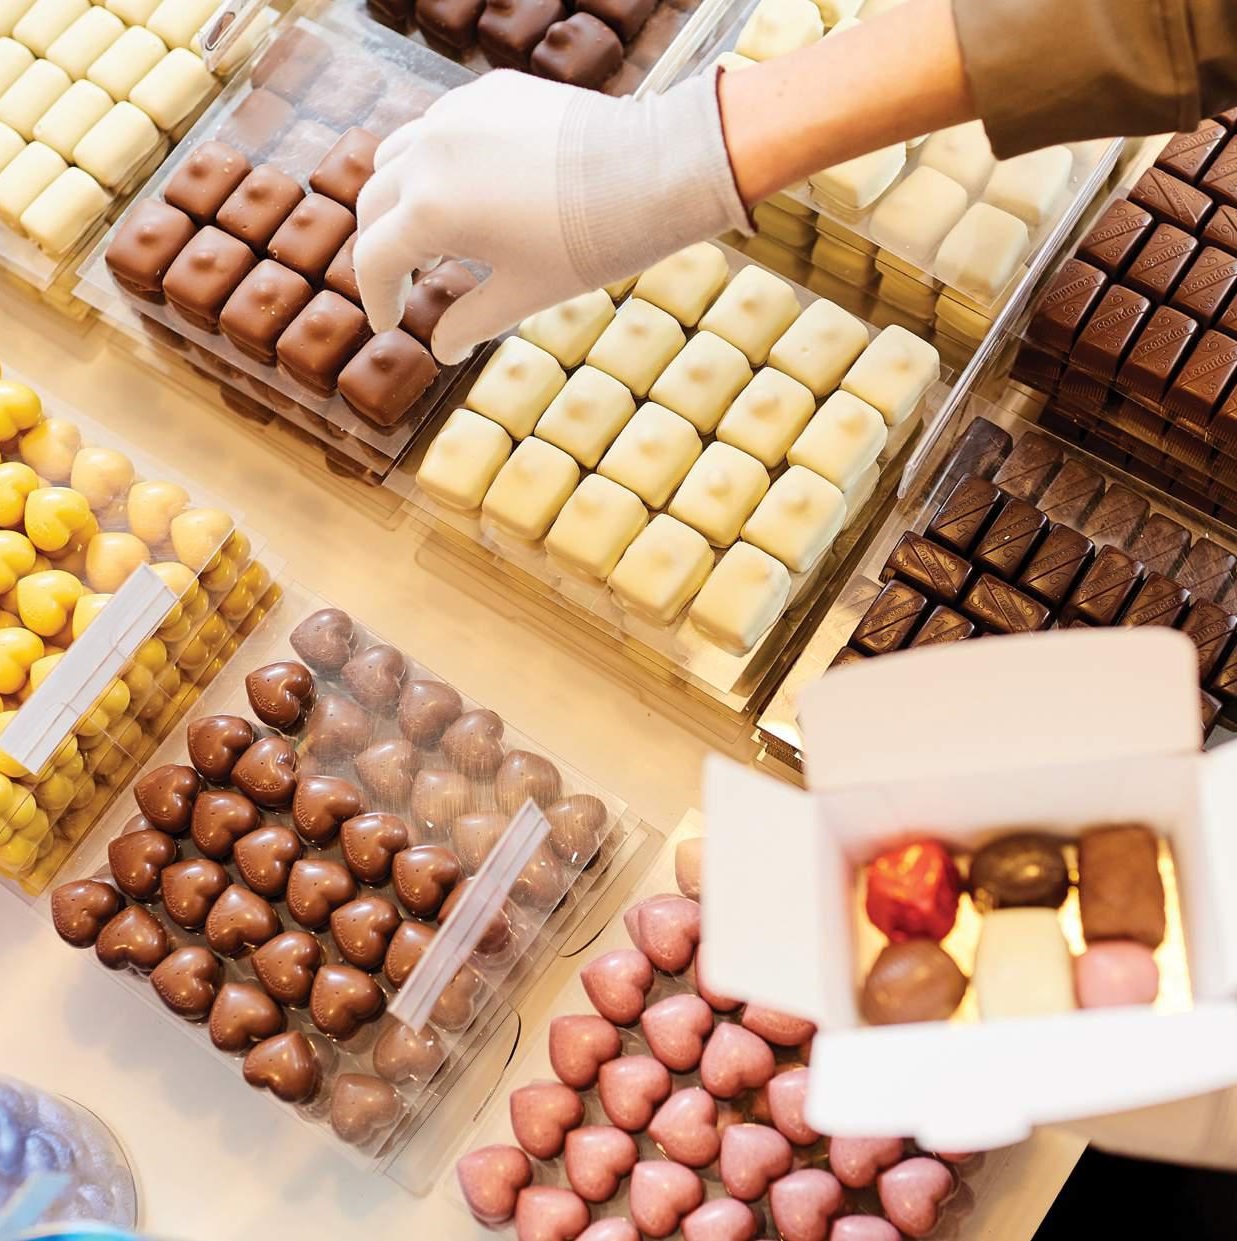 Assortiment chocolats belges 'Selection' 500 G - Délicieux chocolat belge